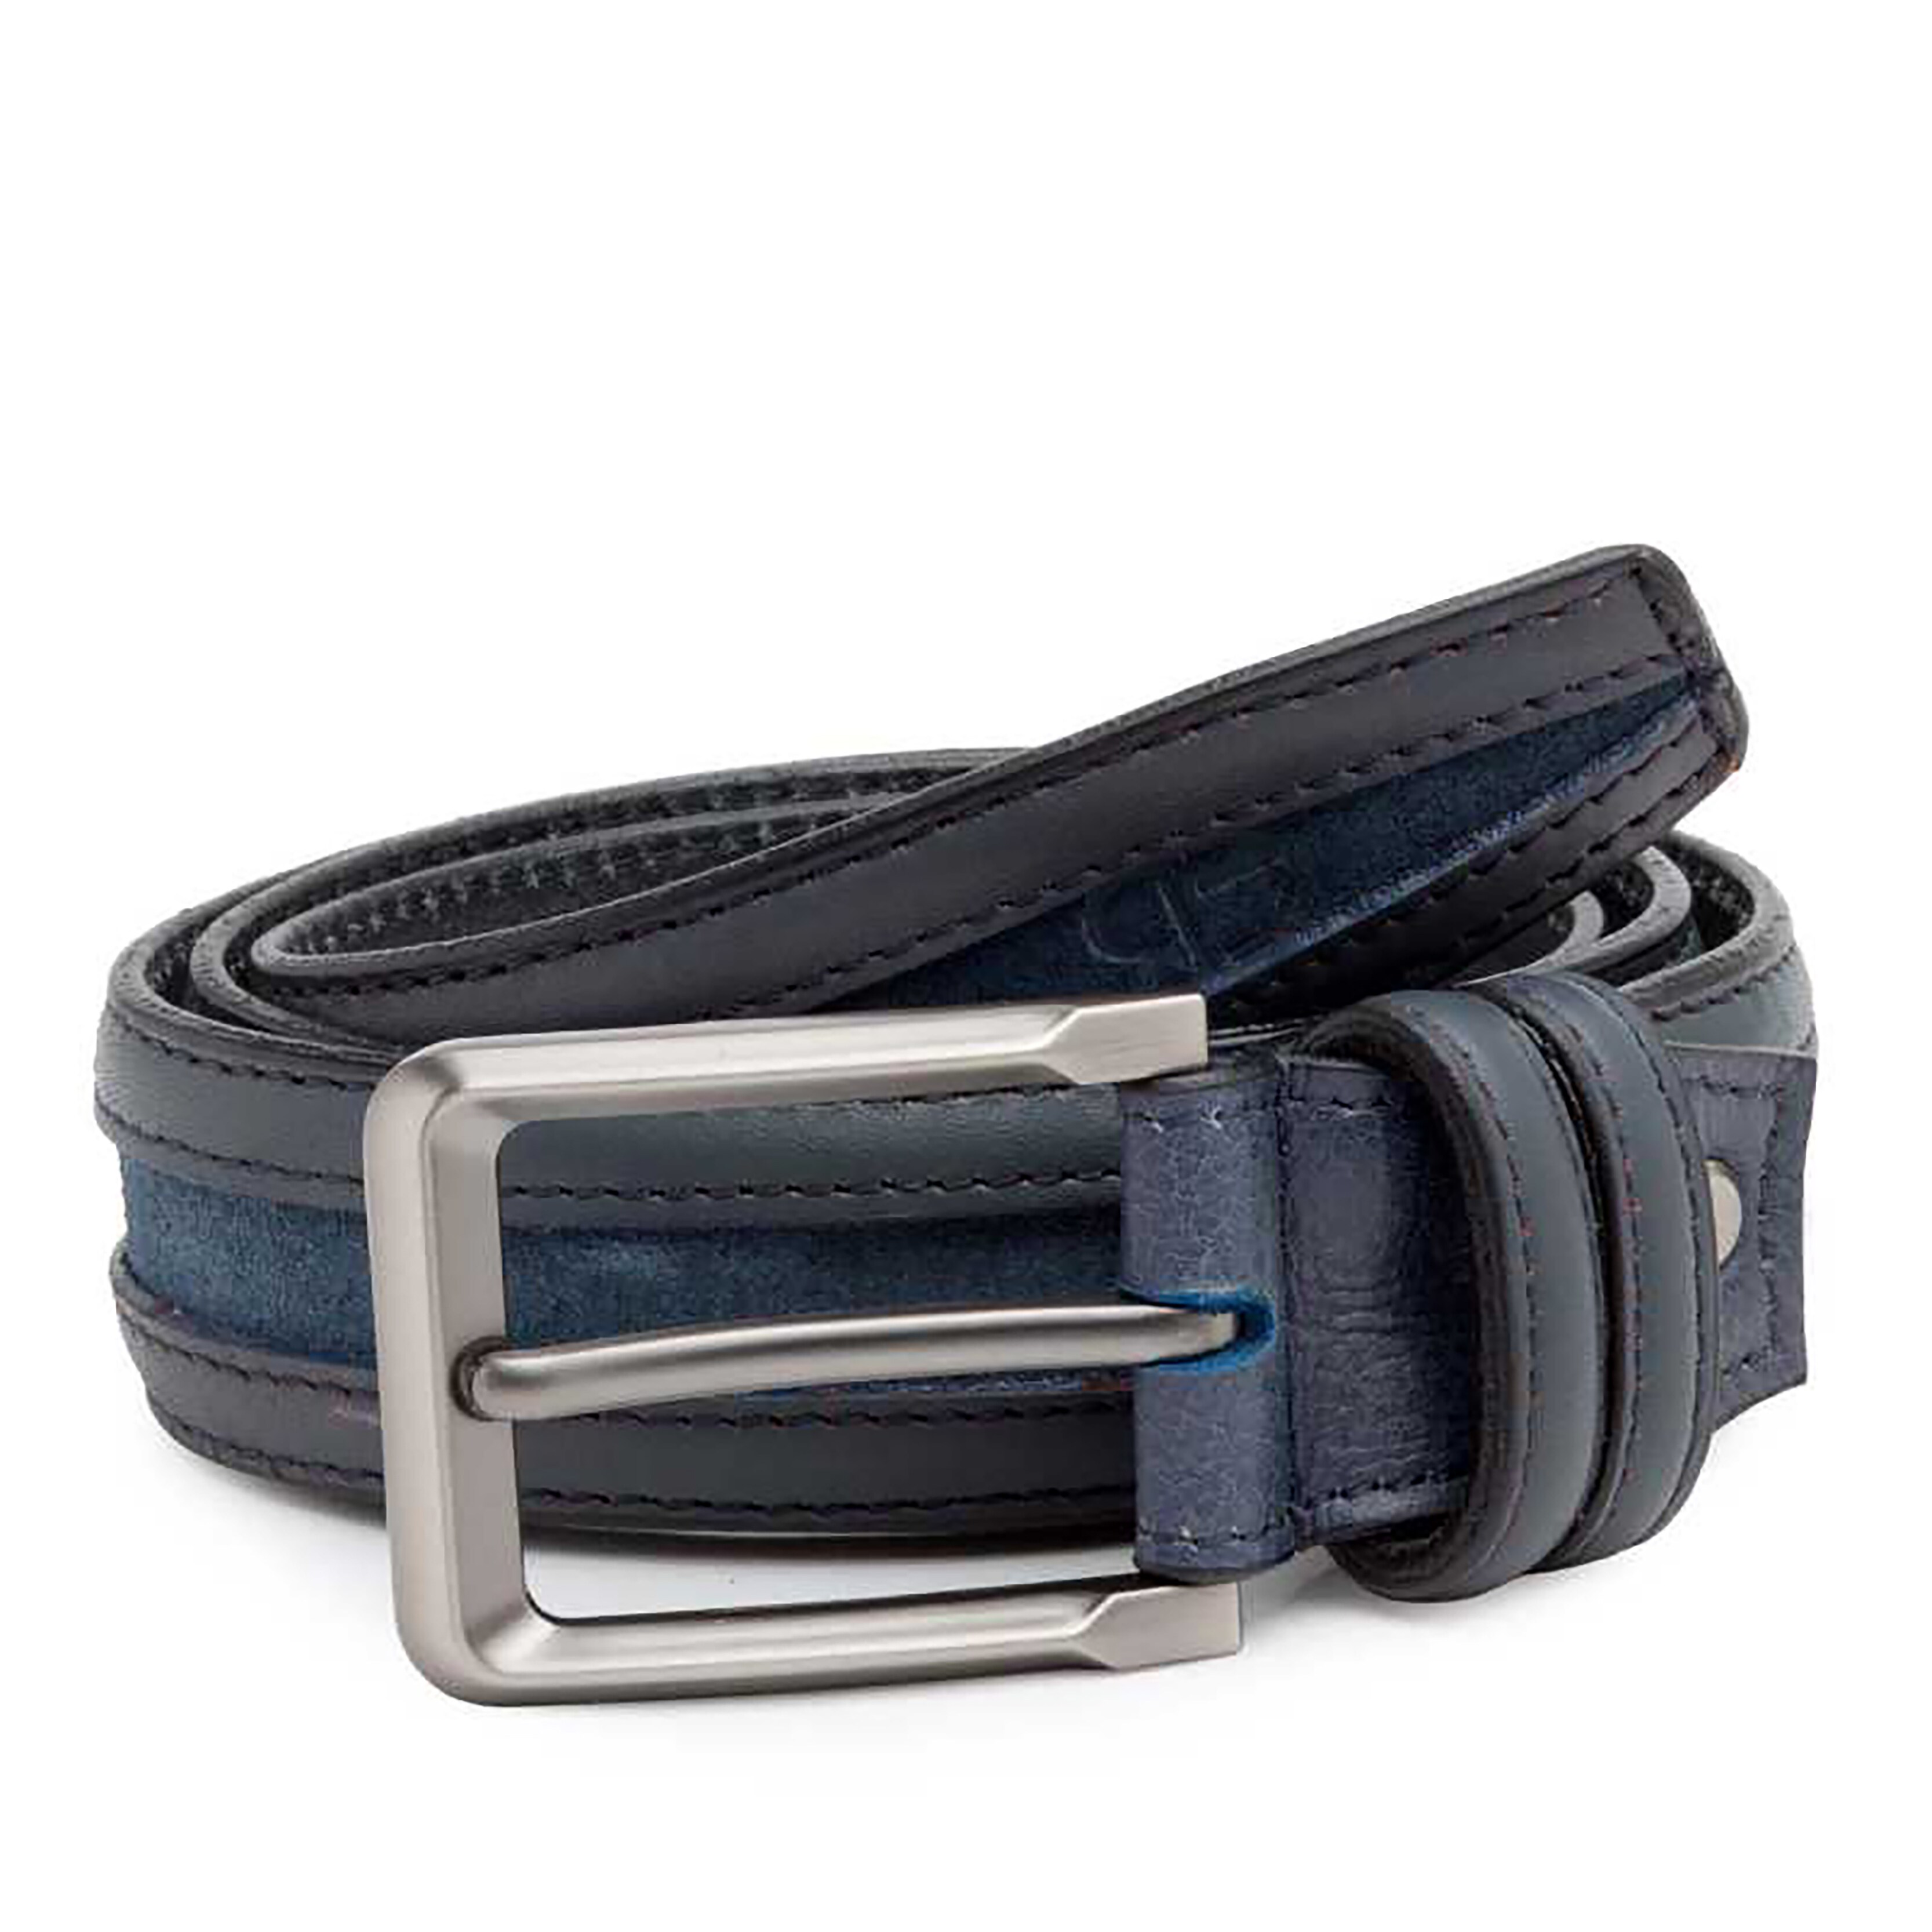 Blue leather belt by Escaro Royale